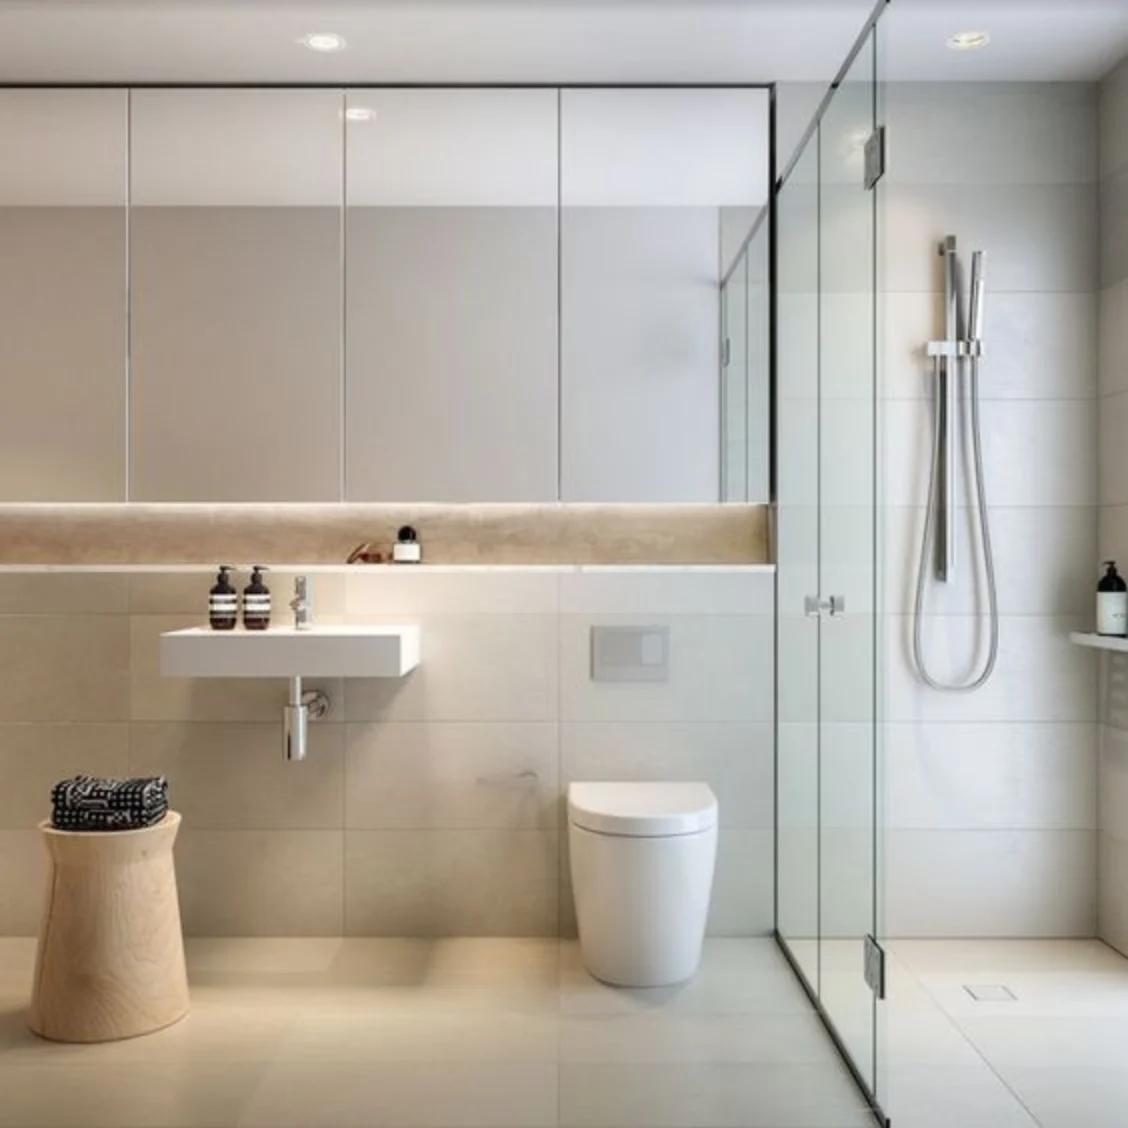 minimal-decoration-style-bathroom